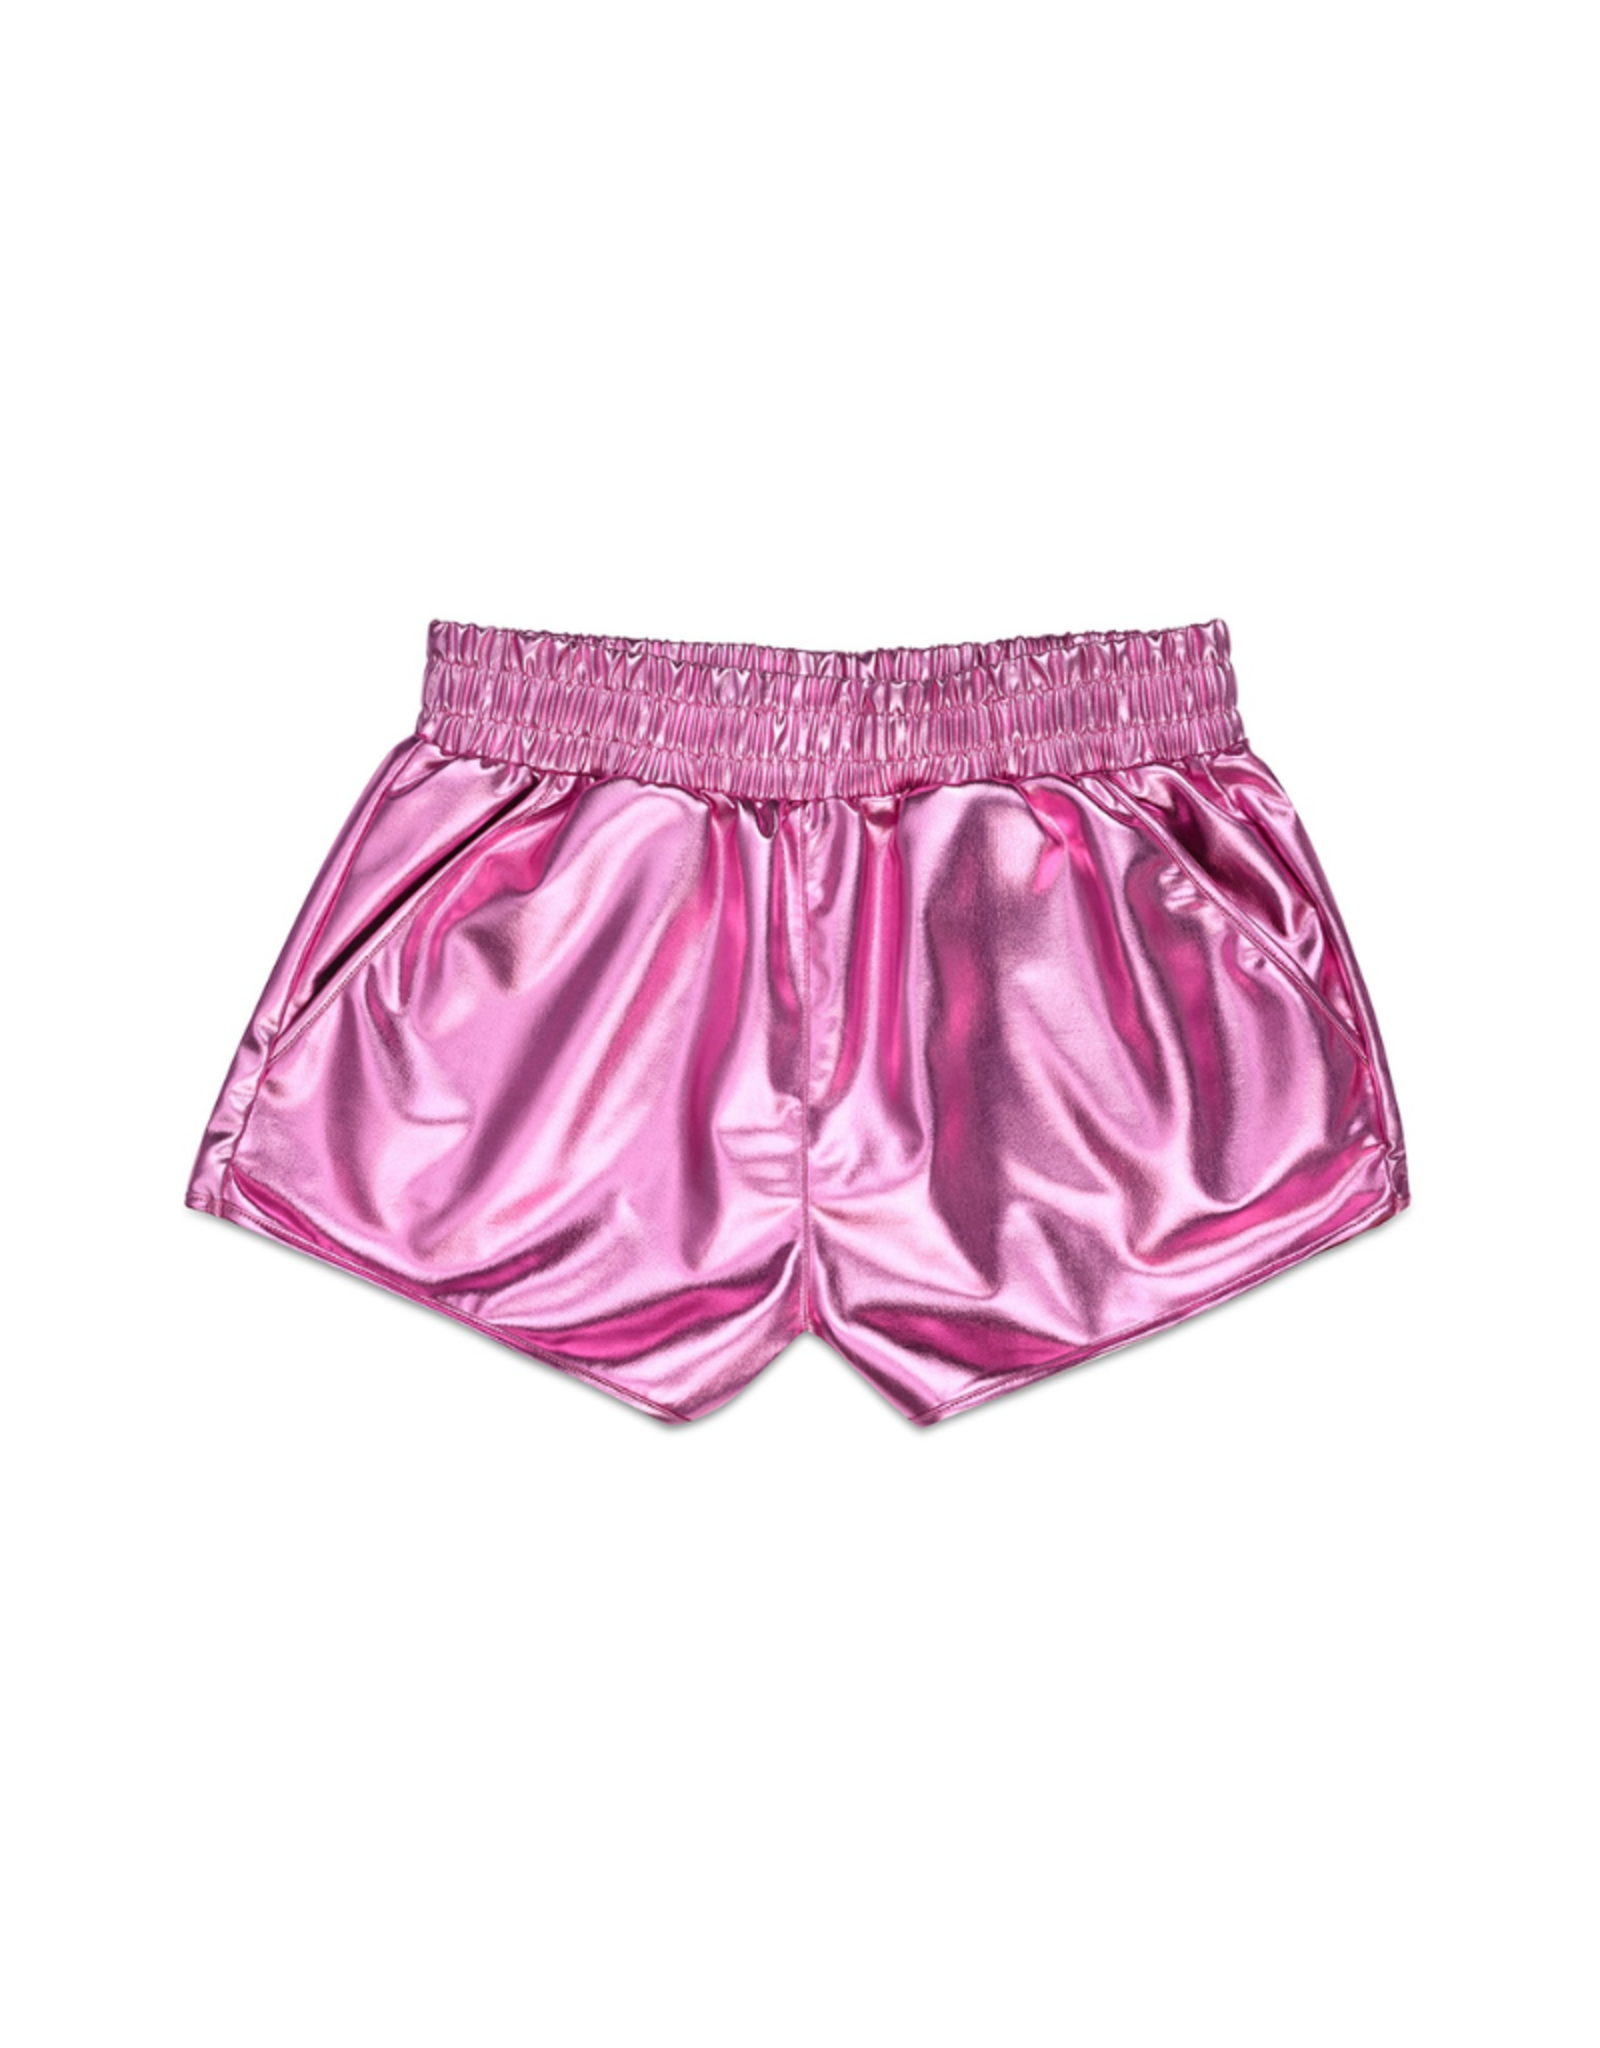 Iscream Pink Metallic Shorts